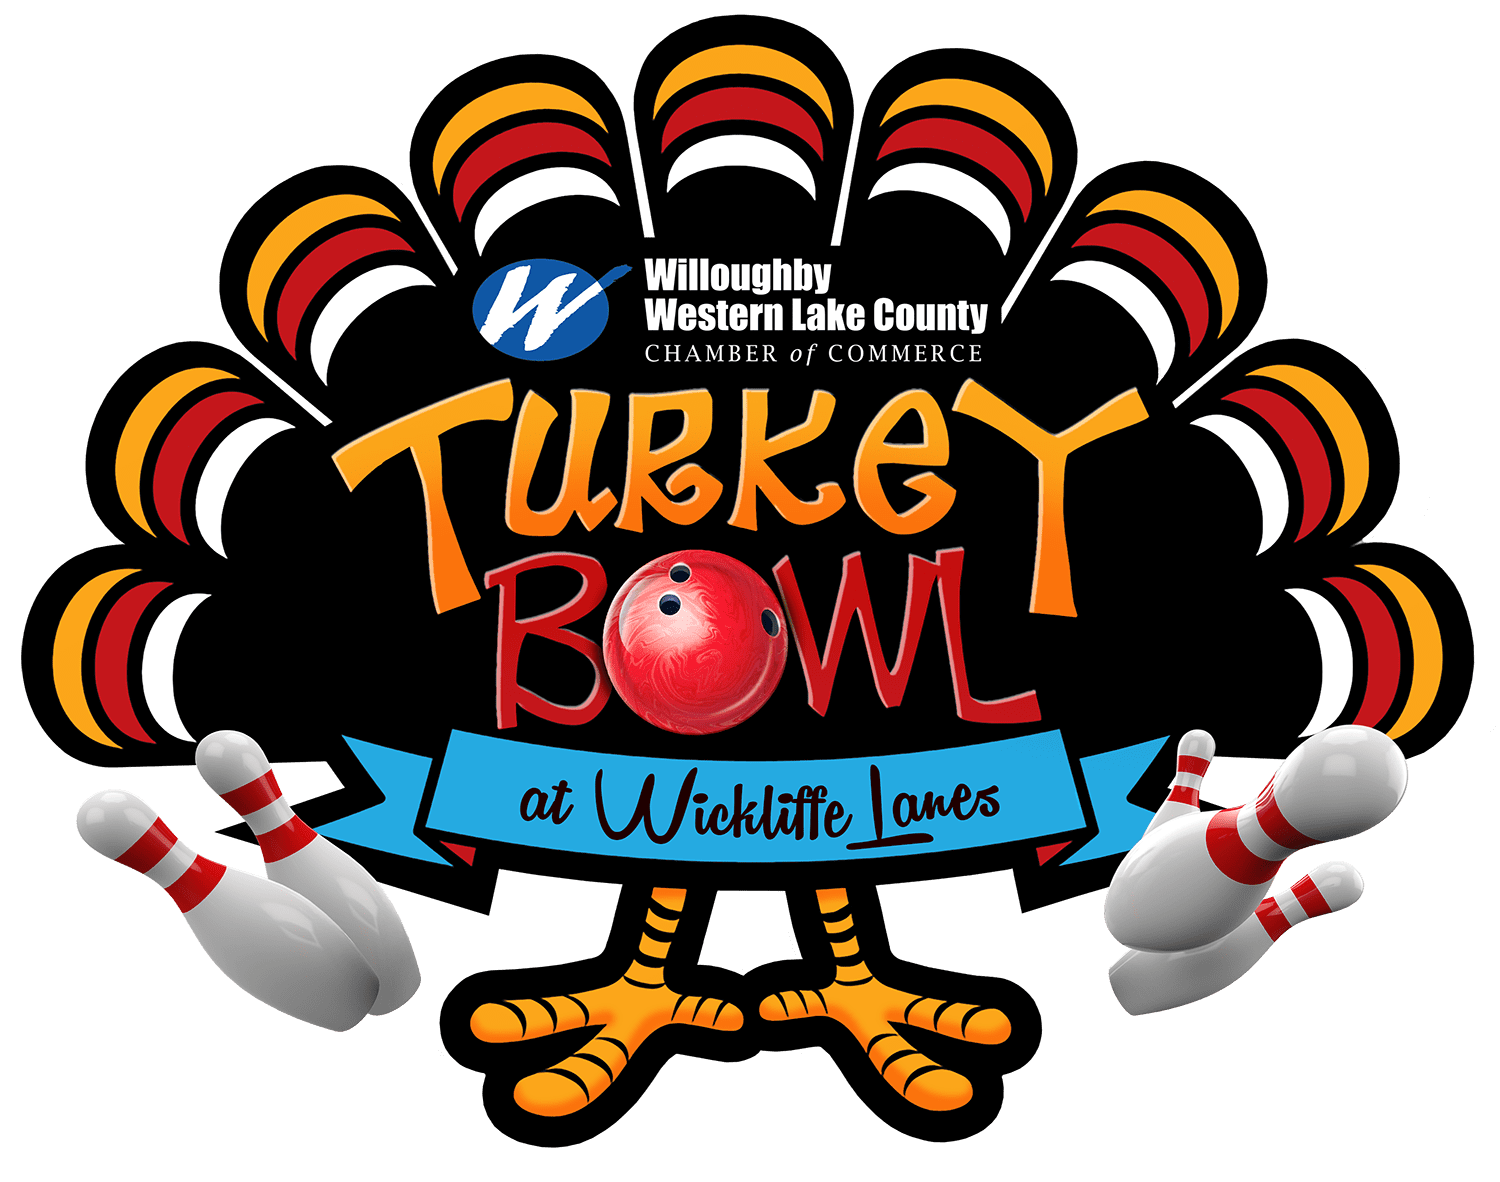 Turkey Bowl